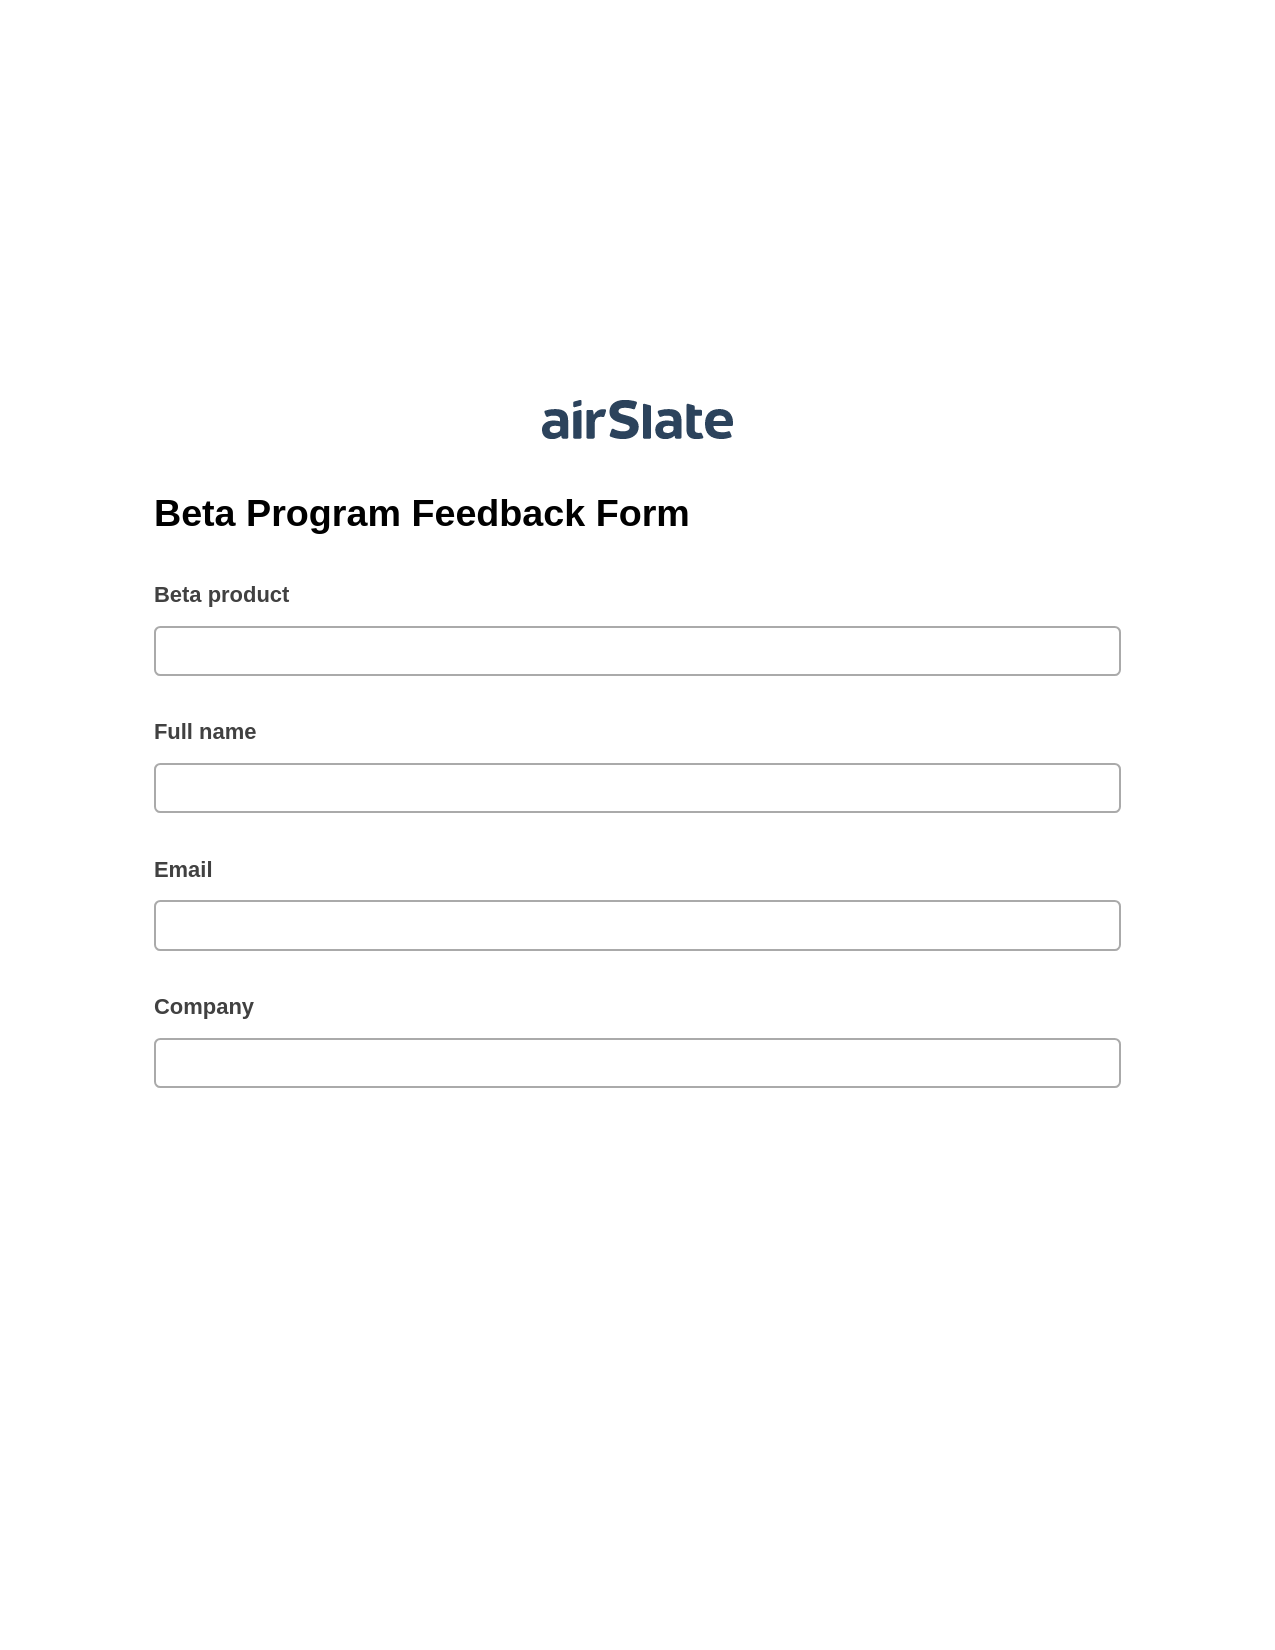 Beta Program Feedback Form Pre-fill Document Bot, Webhook Bot, OneDrive Bot